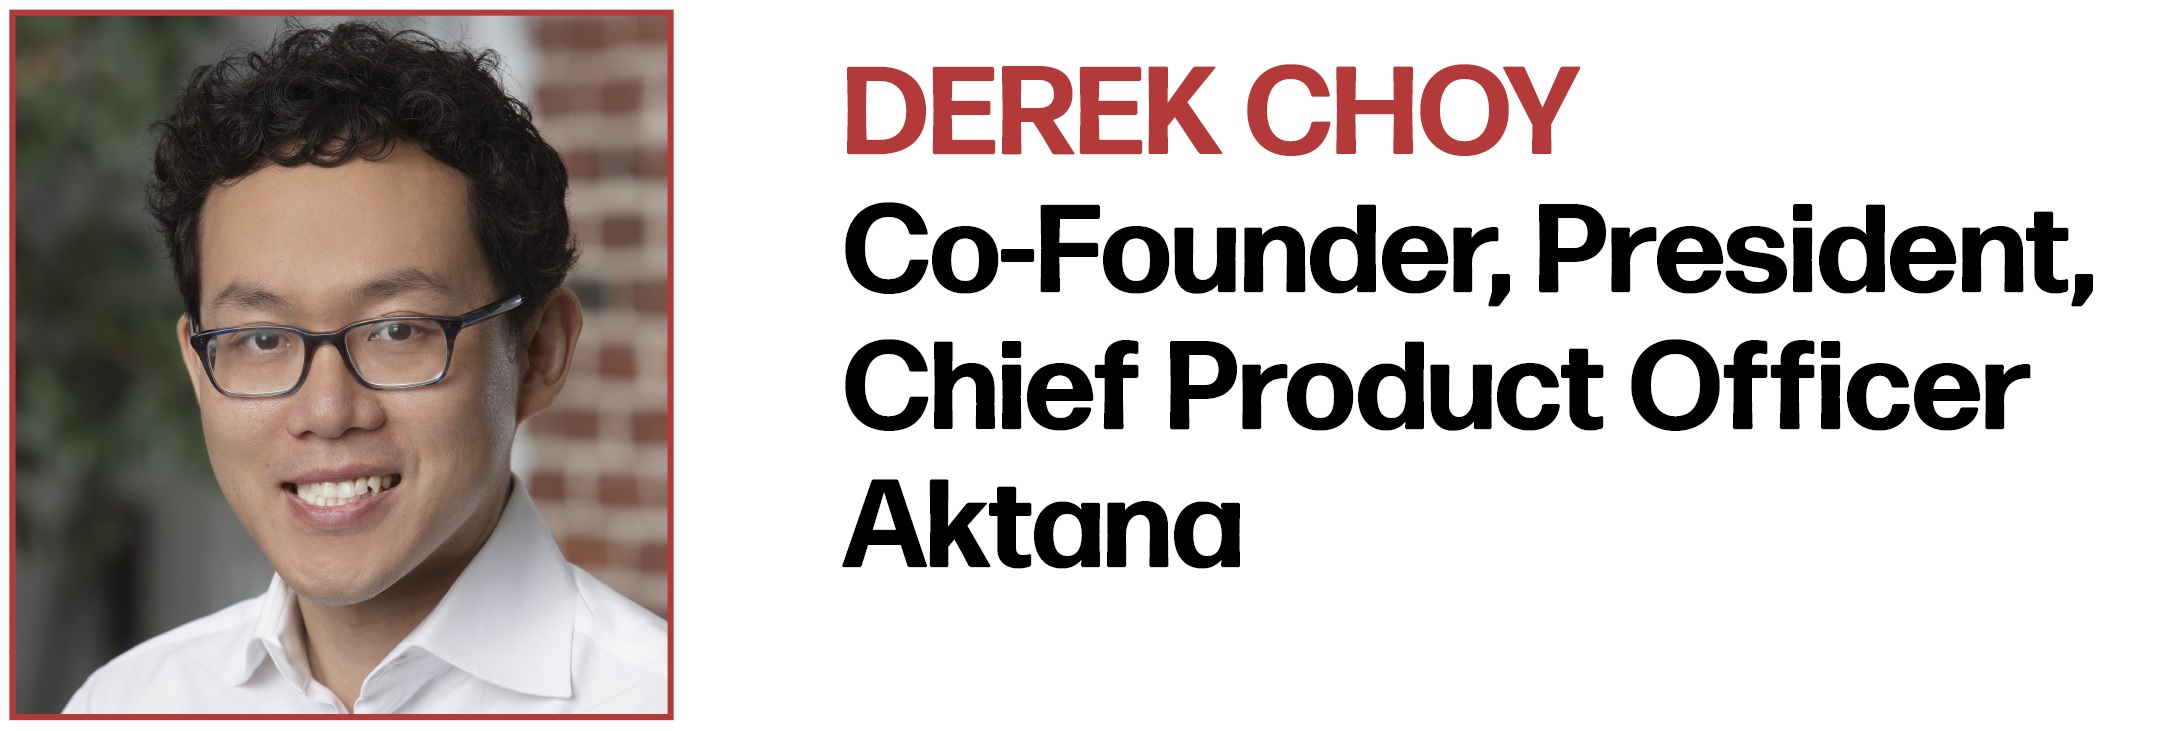 Derek Choy Co-Founder, President, Chief Product Officer Aktana